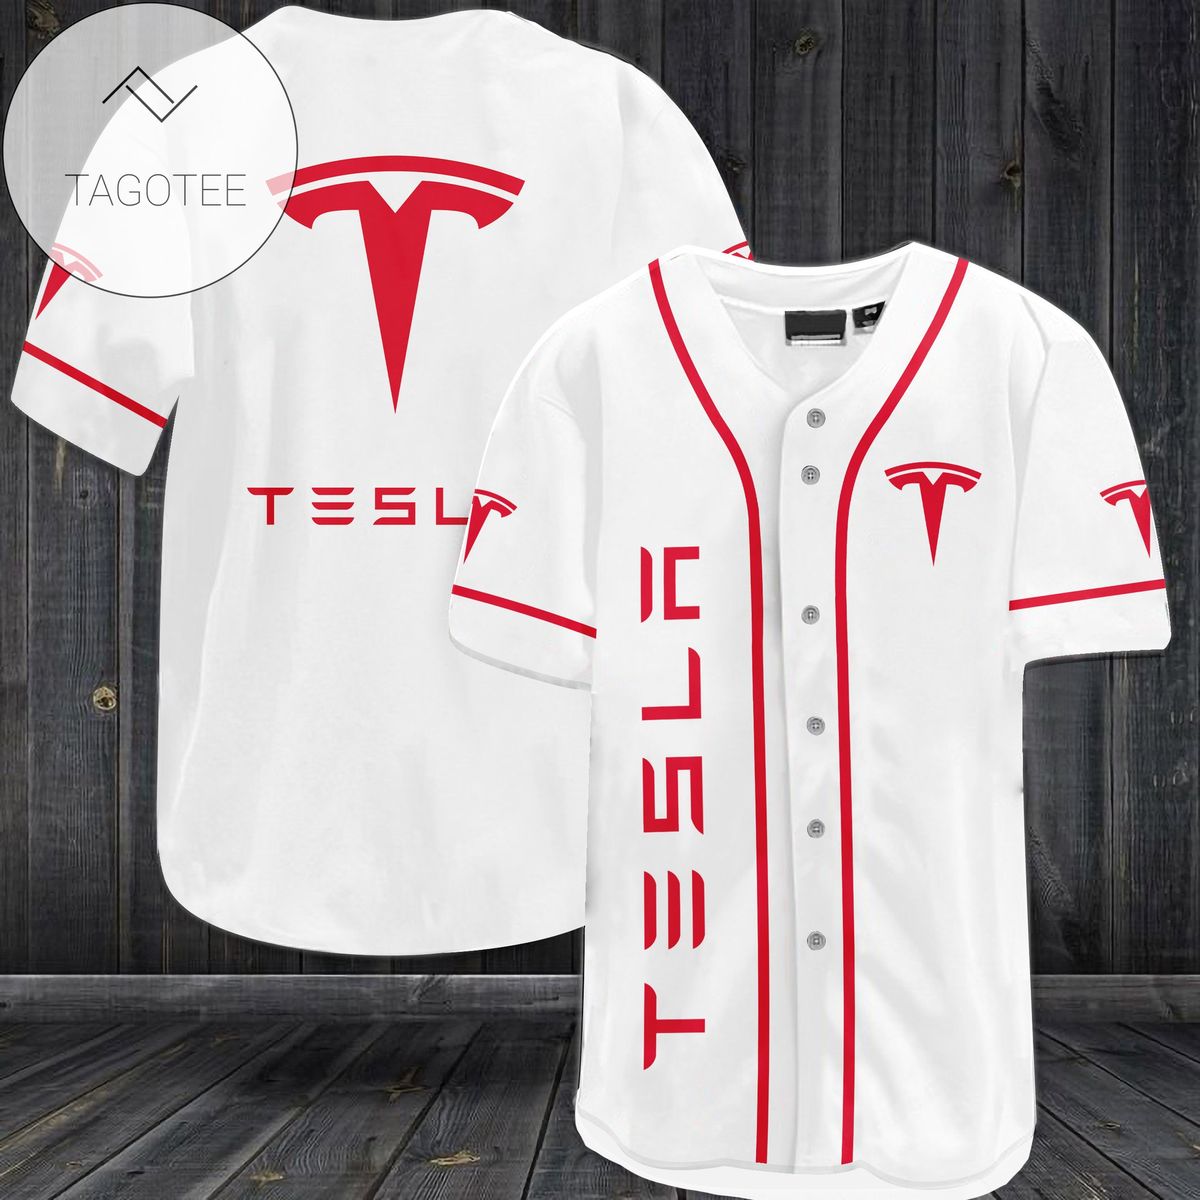 Tesla Baseball Jersey - White